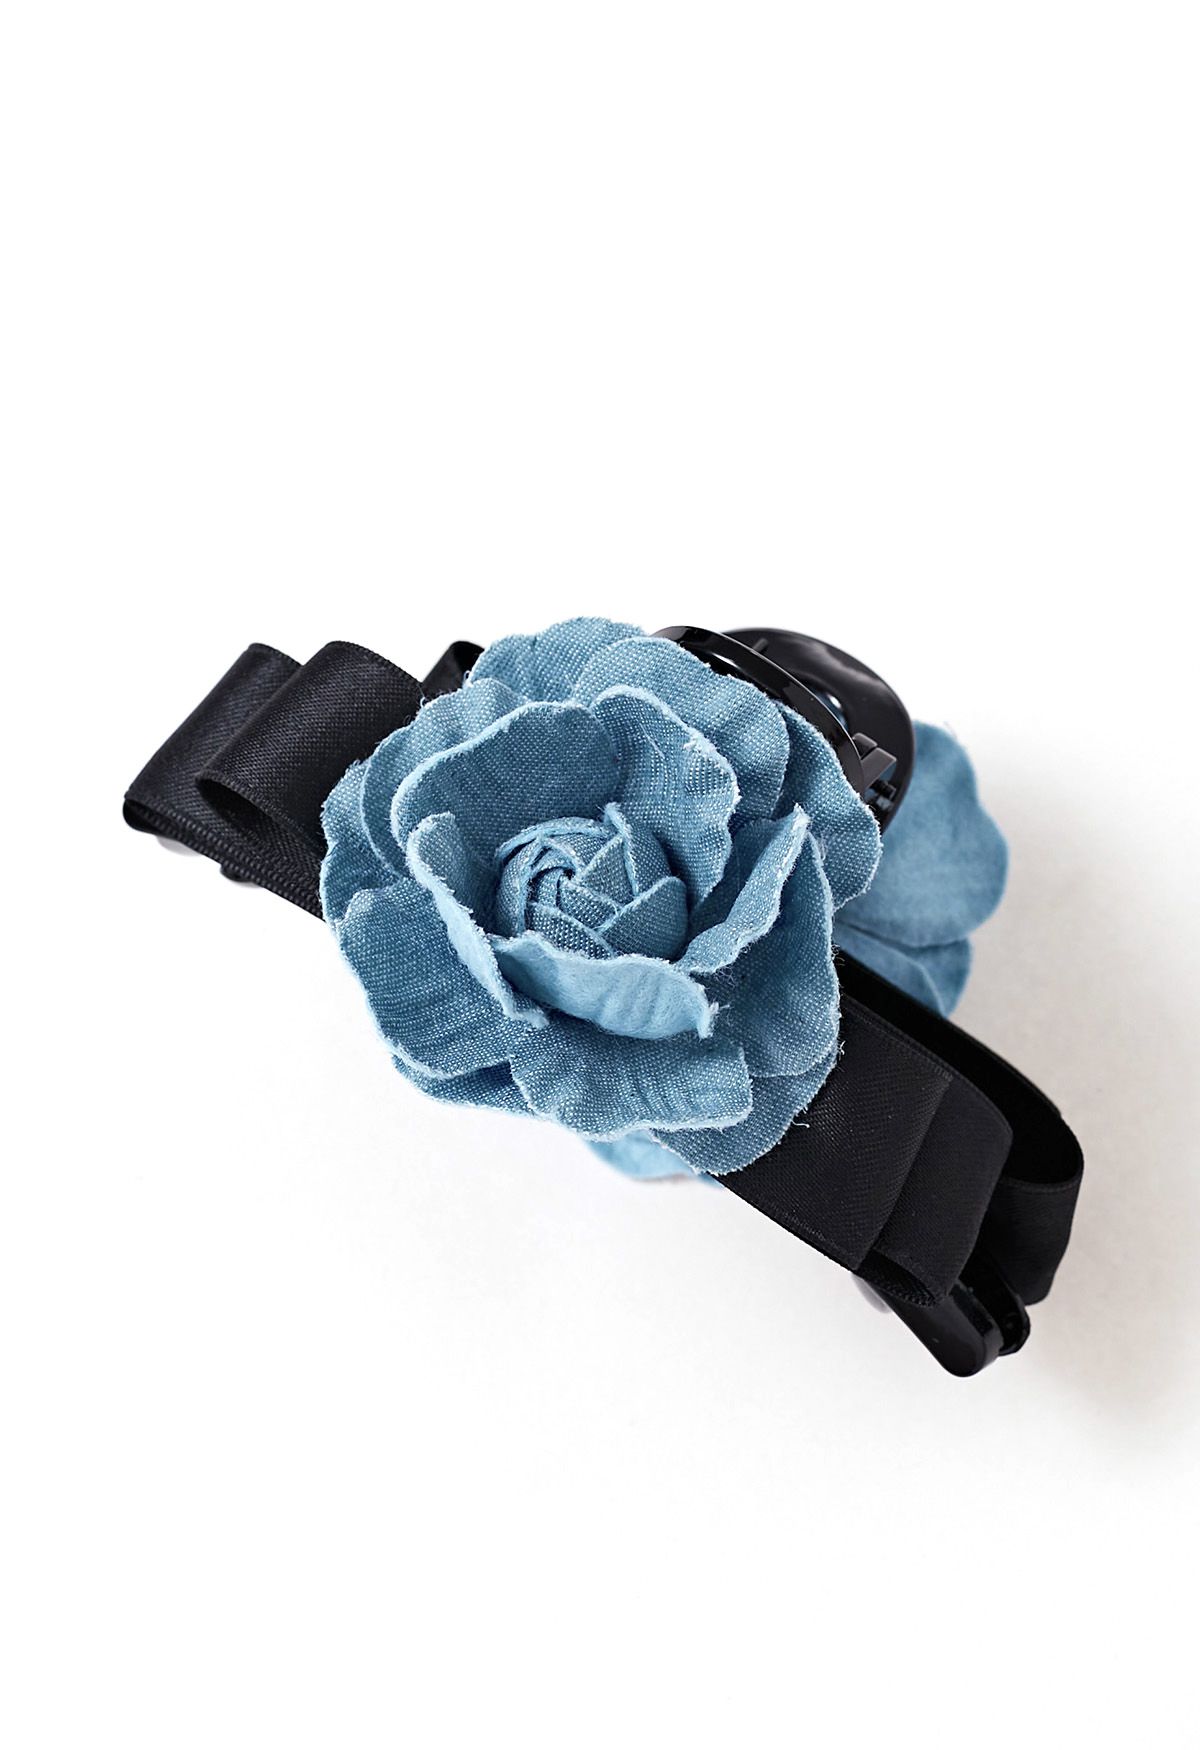 Clip de pelo hecho a mano floral azul denim